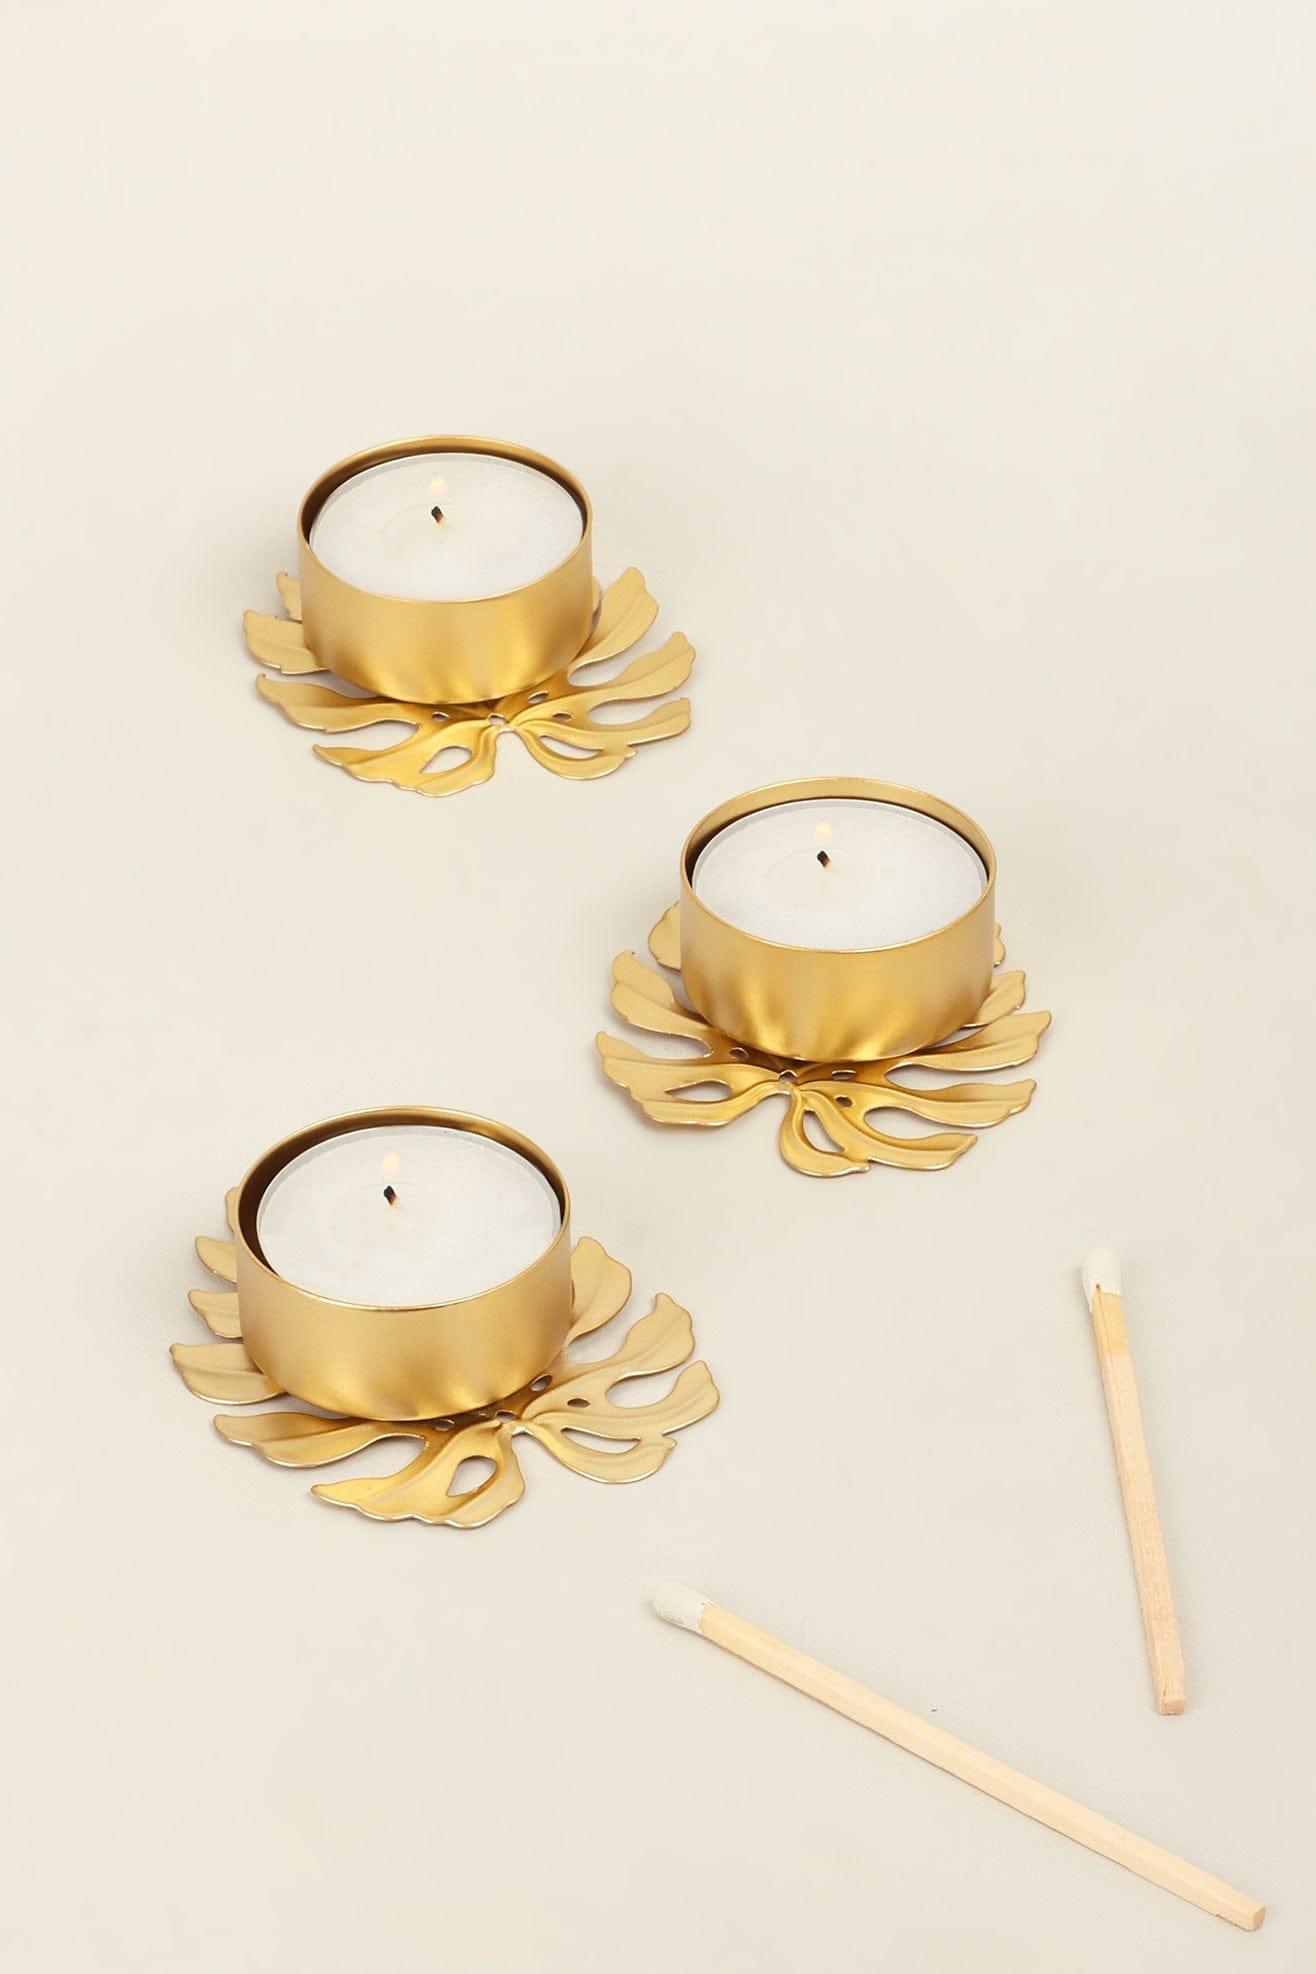 G Decor Candles & Candle Holders Gold Set of 3 Gold Palm Leaf Tea Light Holders